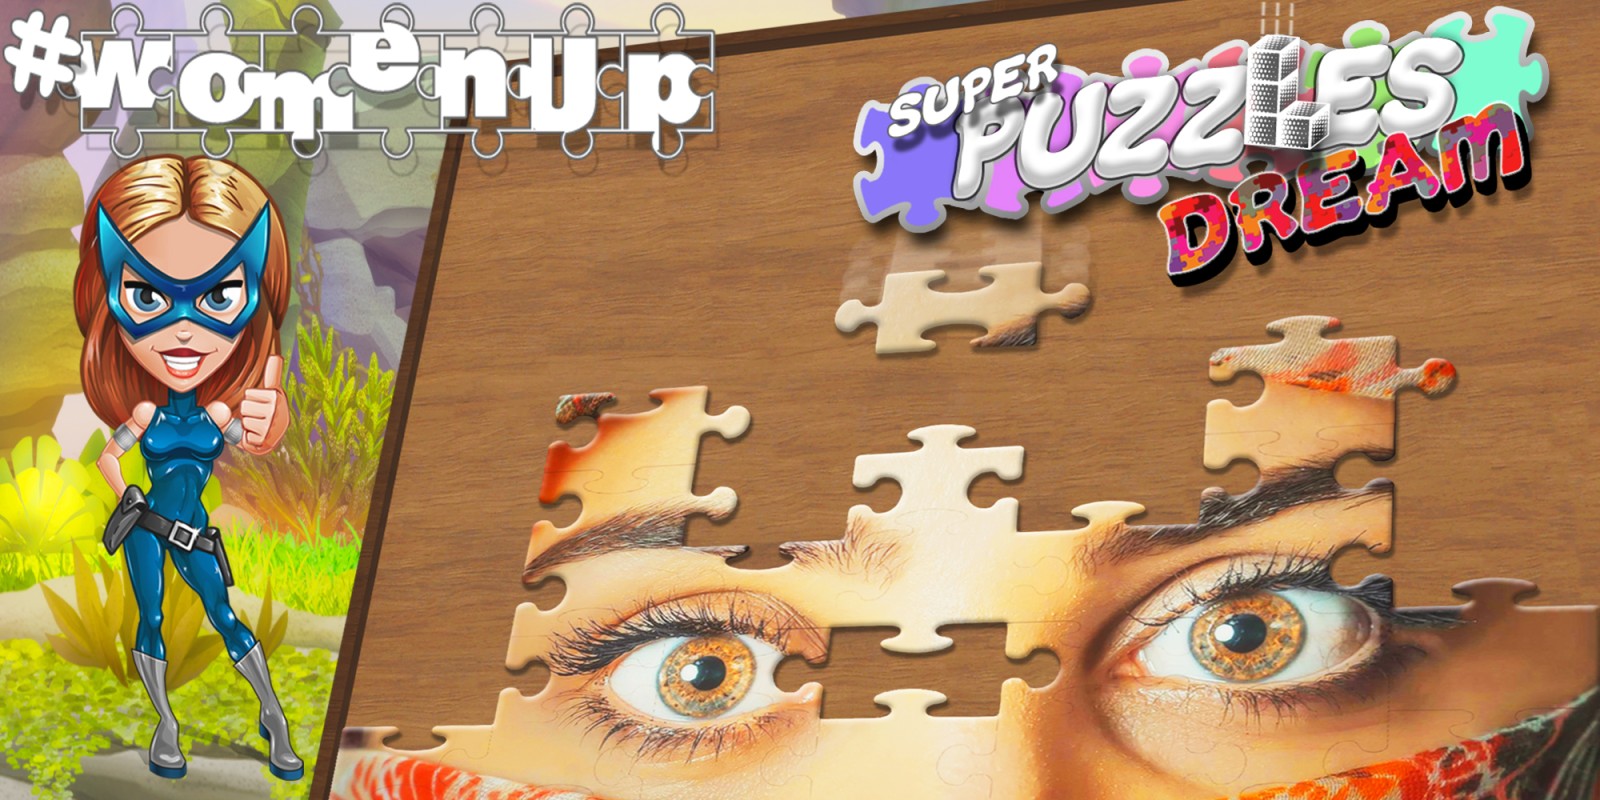 #womenUp, Super Puzzles Dream